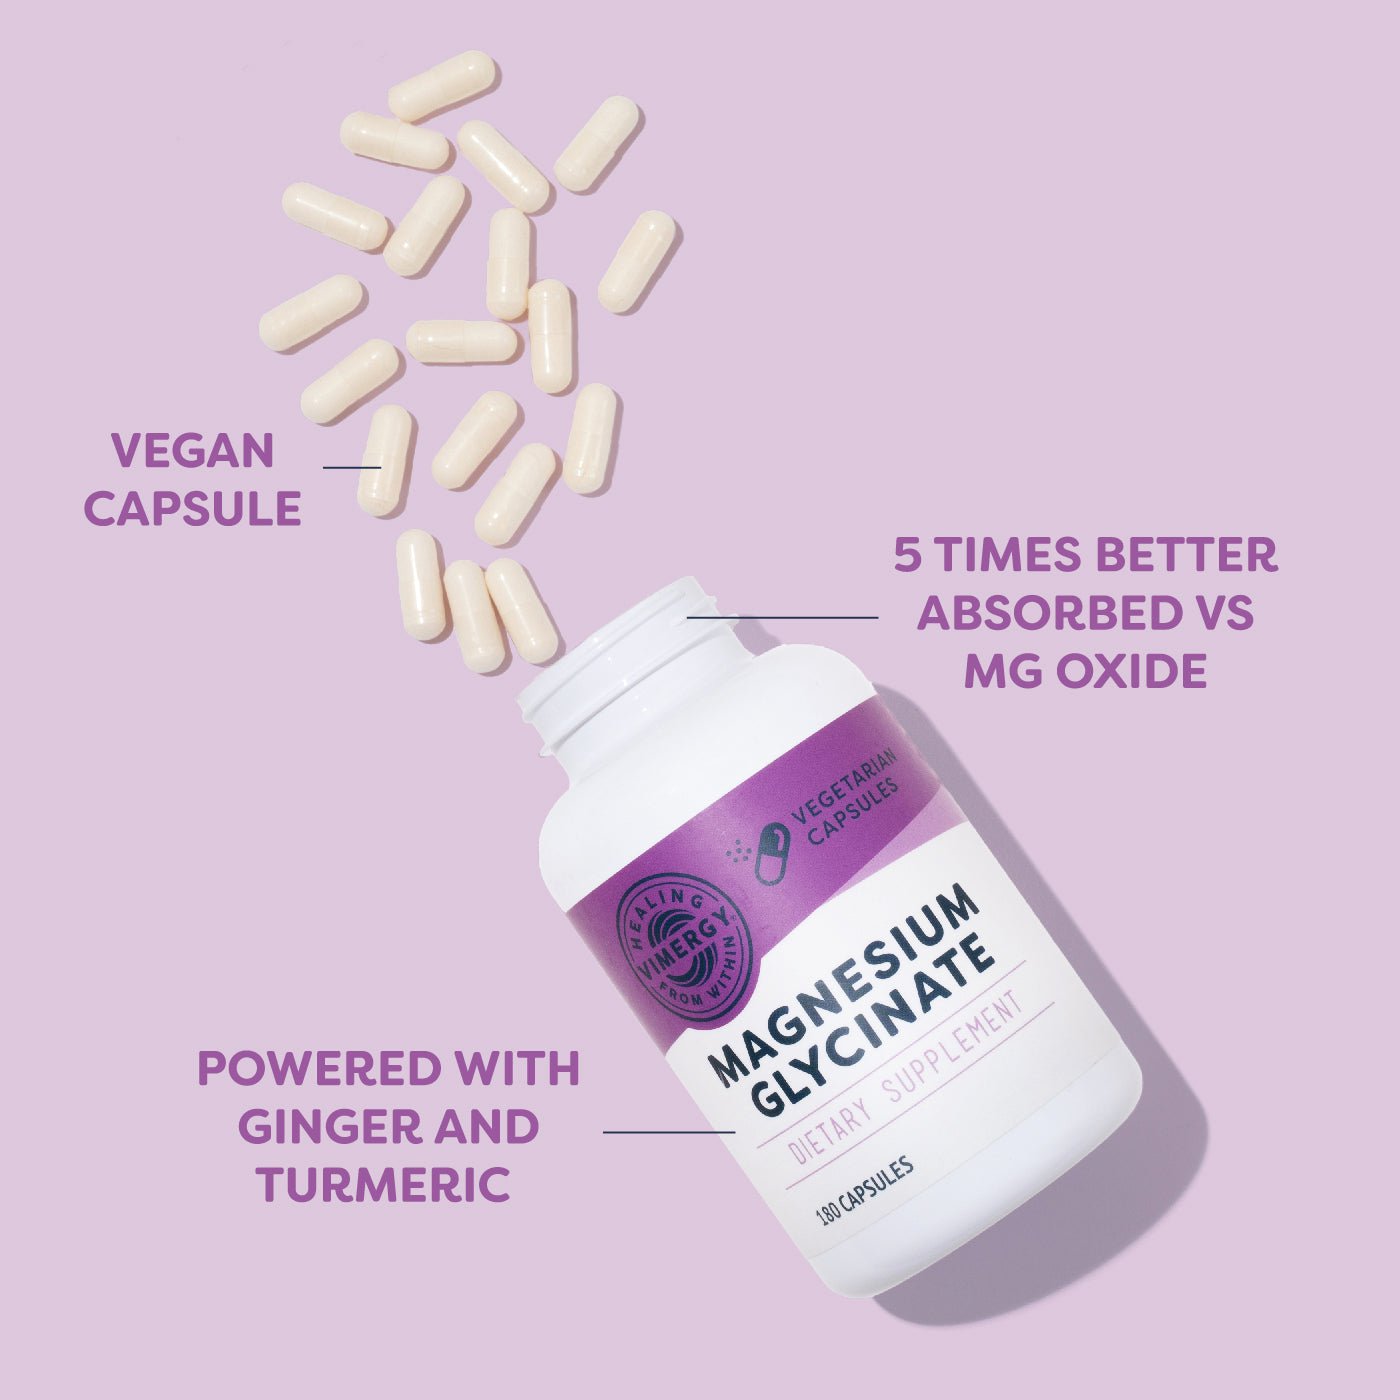 Magnesium Glycinate Vimergy Supplements Vitamins